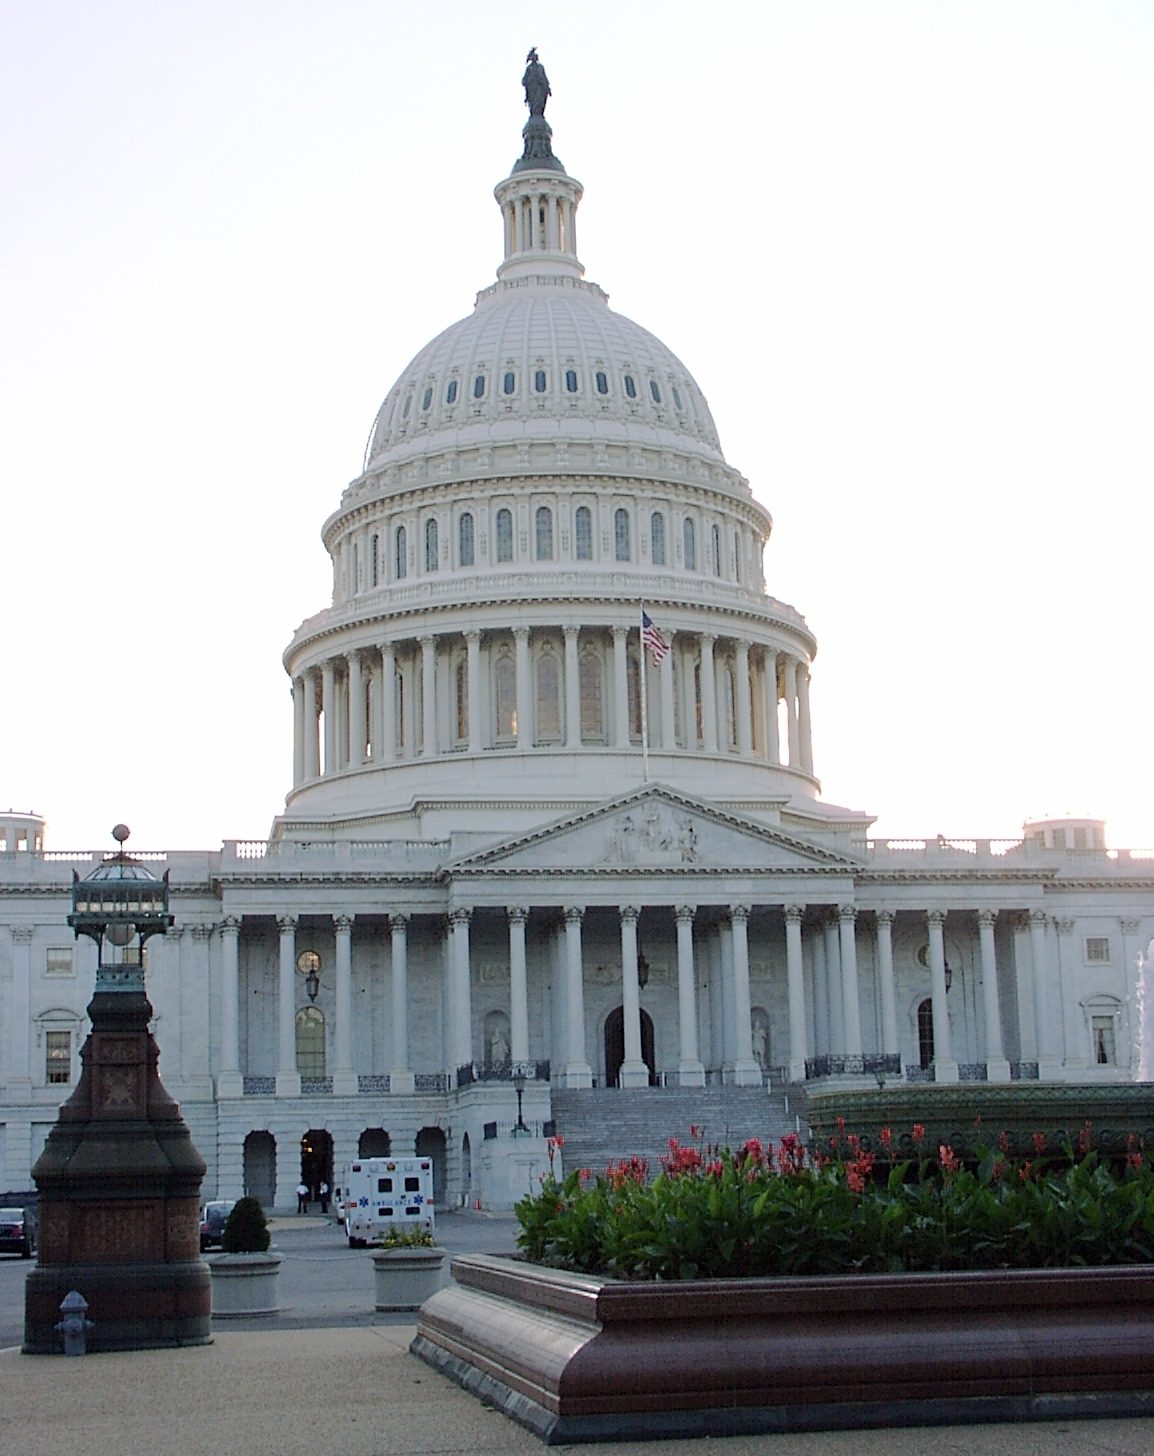 BREAKING: Senate Votes to Invoke Cloture on FAA Reauthorization Bill - dronelife.com